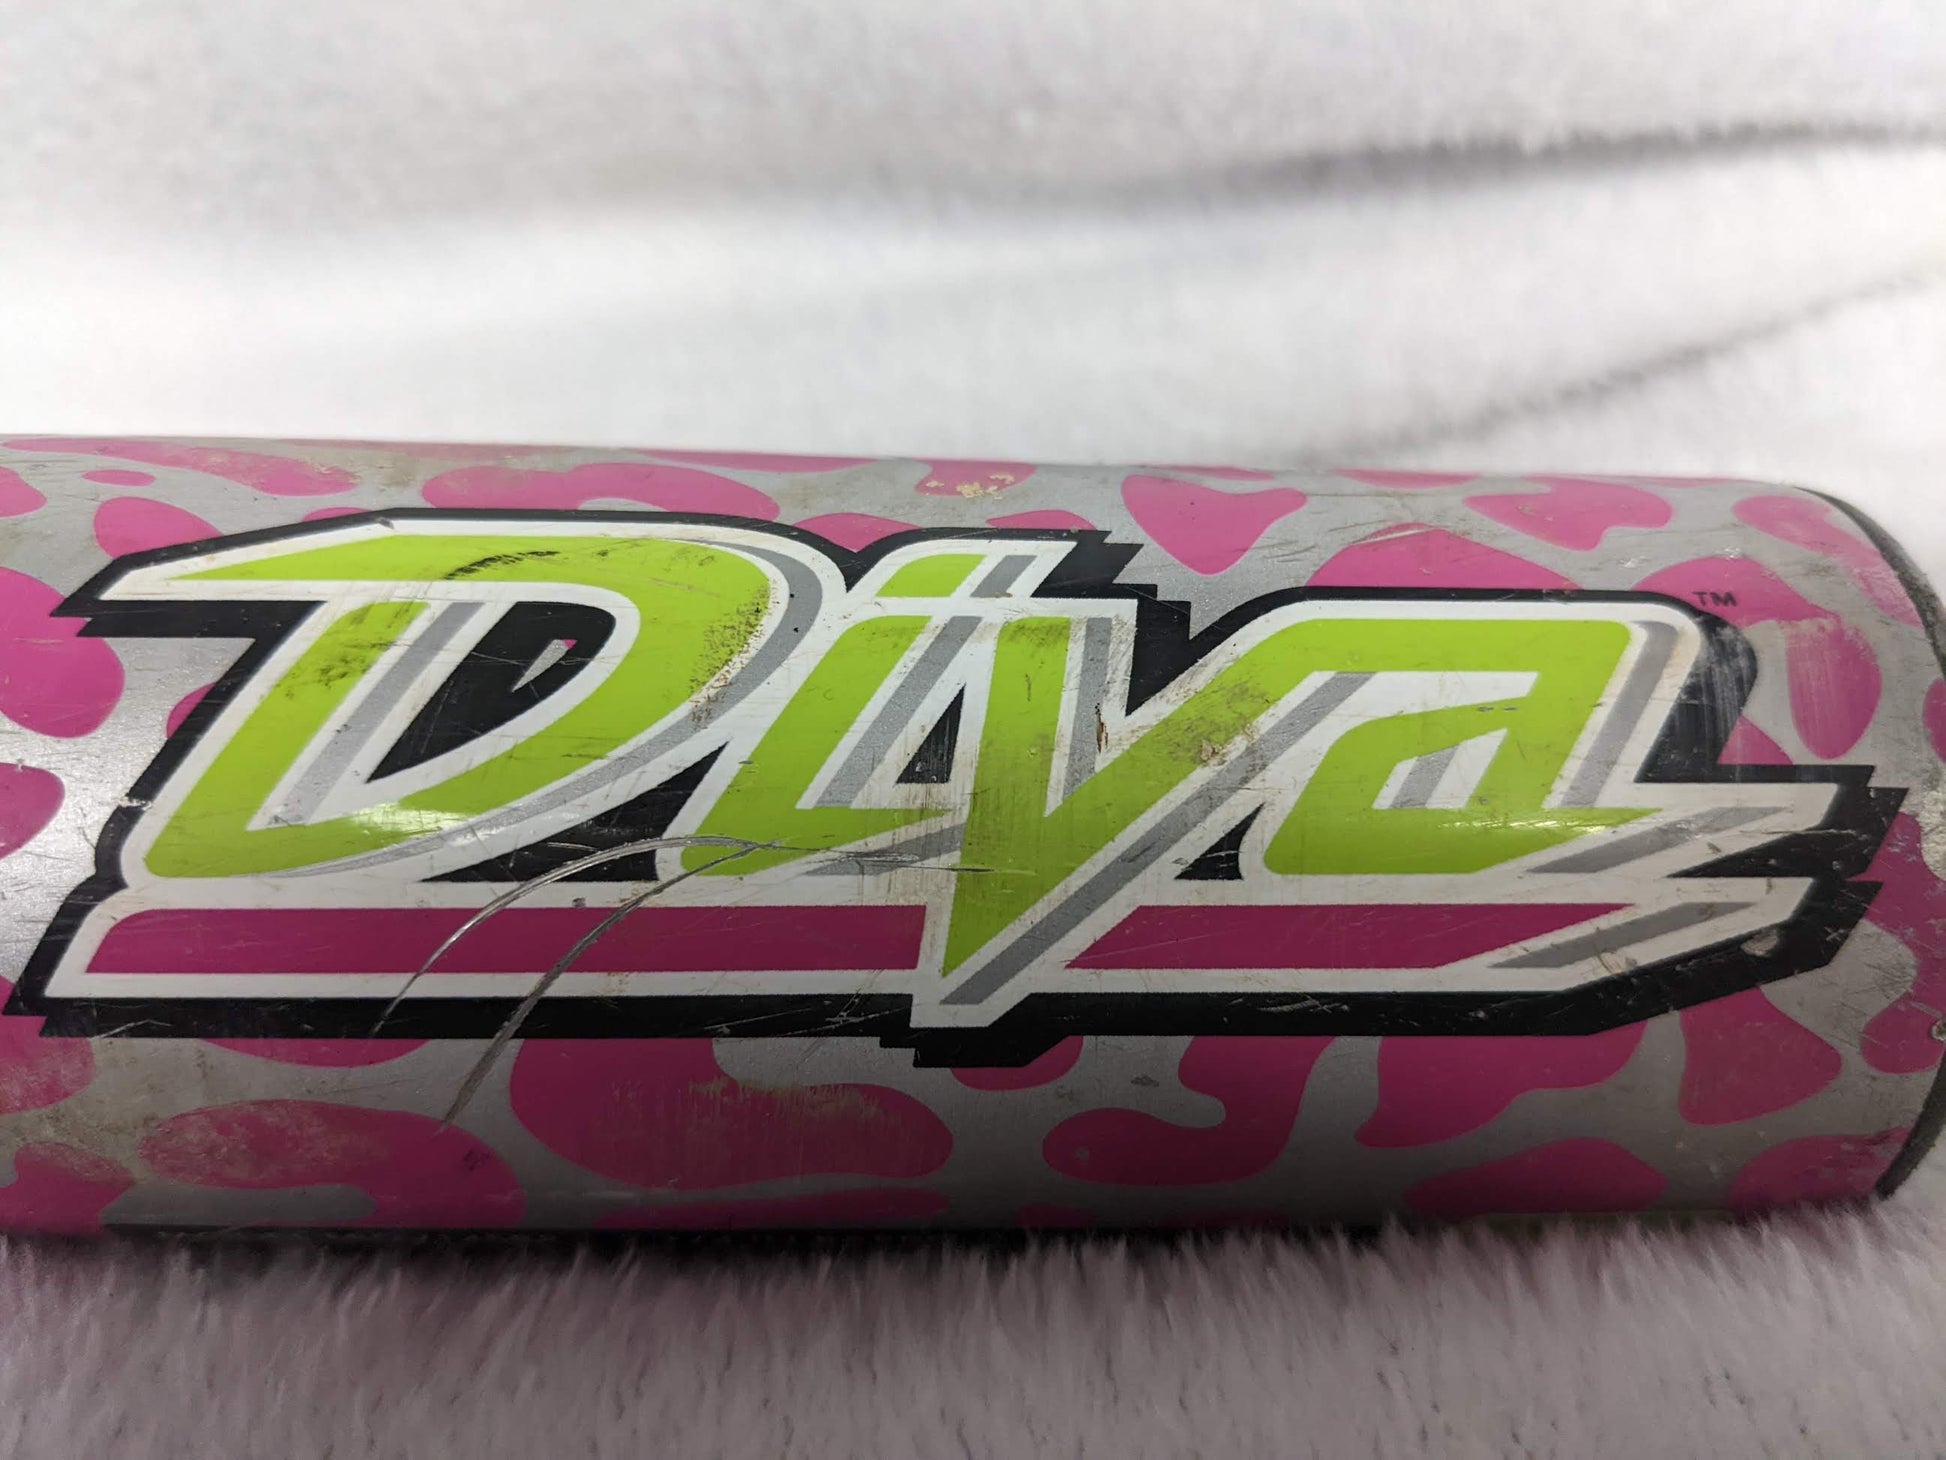 Louisville Slugger Diva USSSA NSA ASA Softball Bat Size 25 In 14